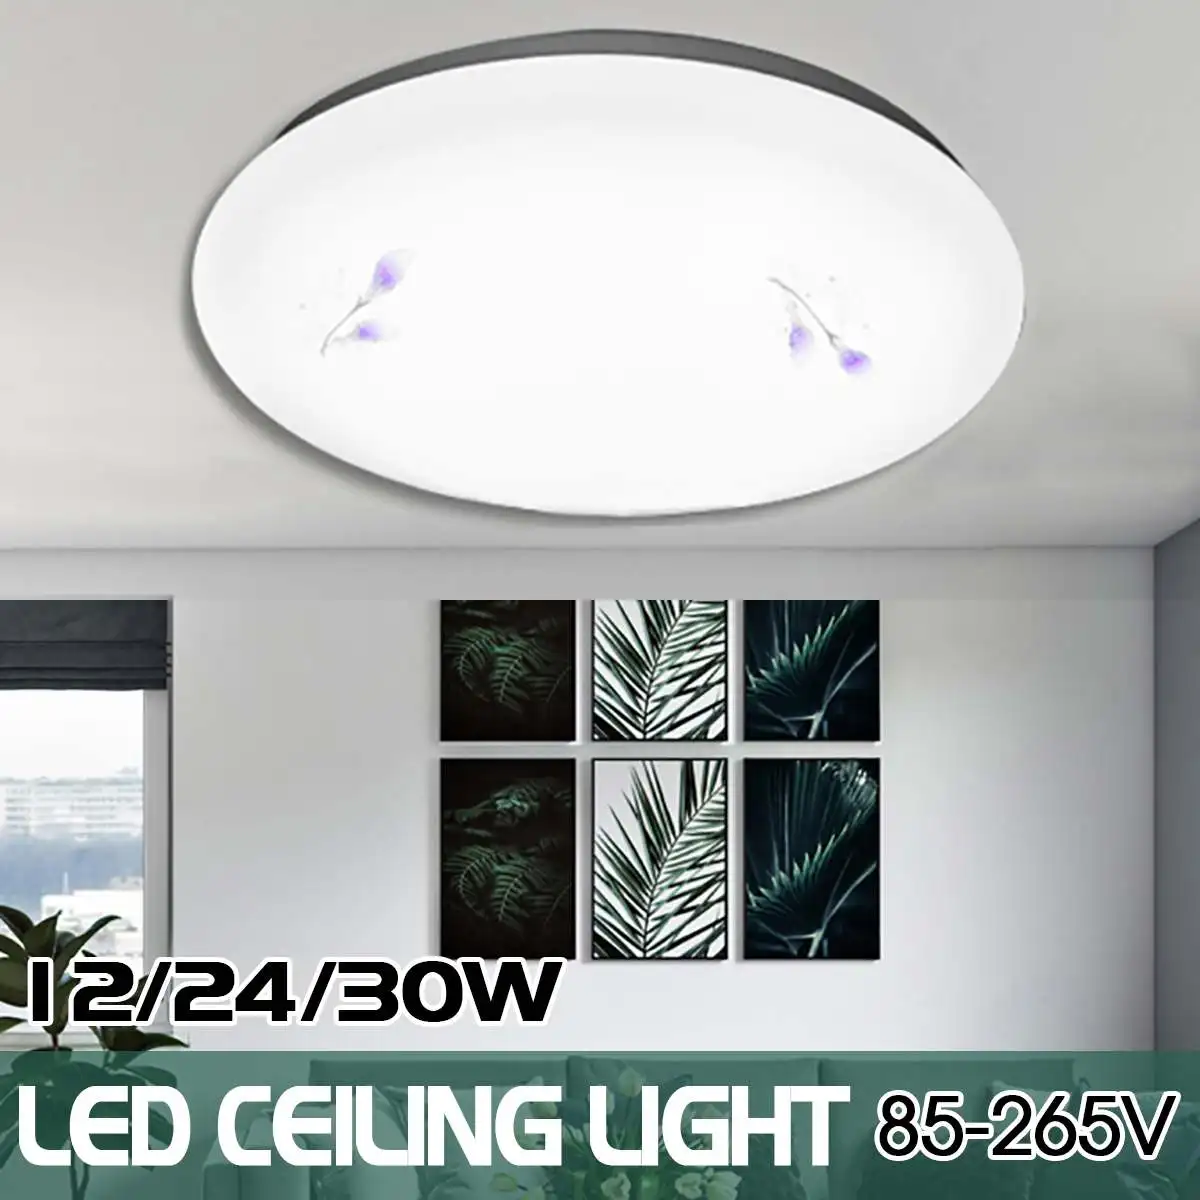 

12W 24W 30W Plum Lily LED Ceiling Light Modern Lamp Home Living Room Lighting Fixture Bedroom Kitchen Surface Mount Flush Panel